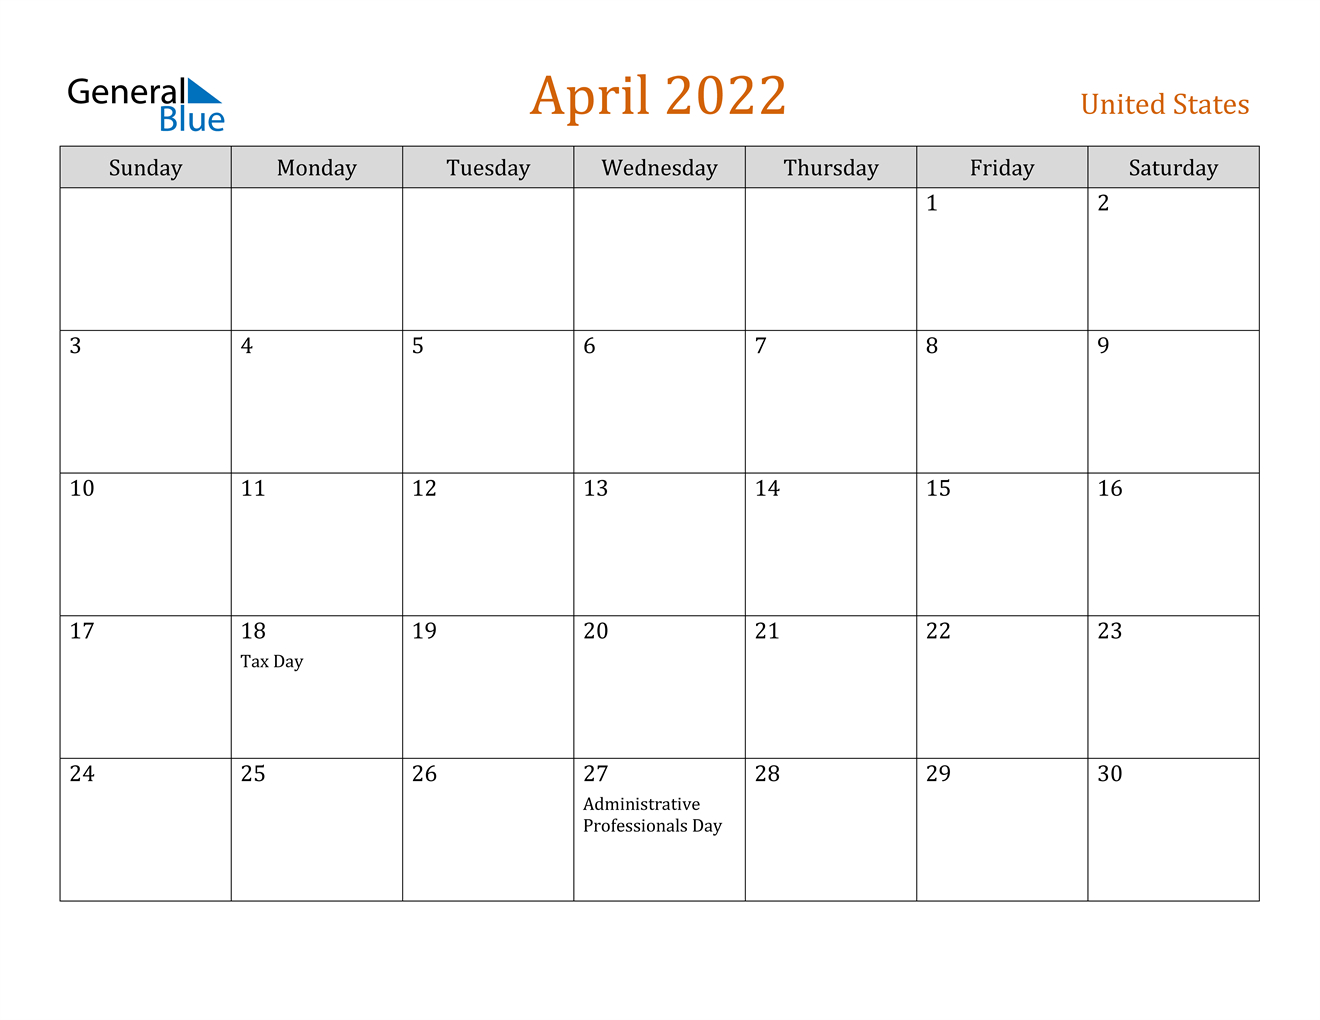 Take April 2022 Blank Calendar